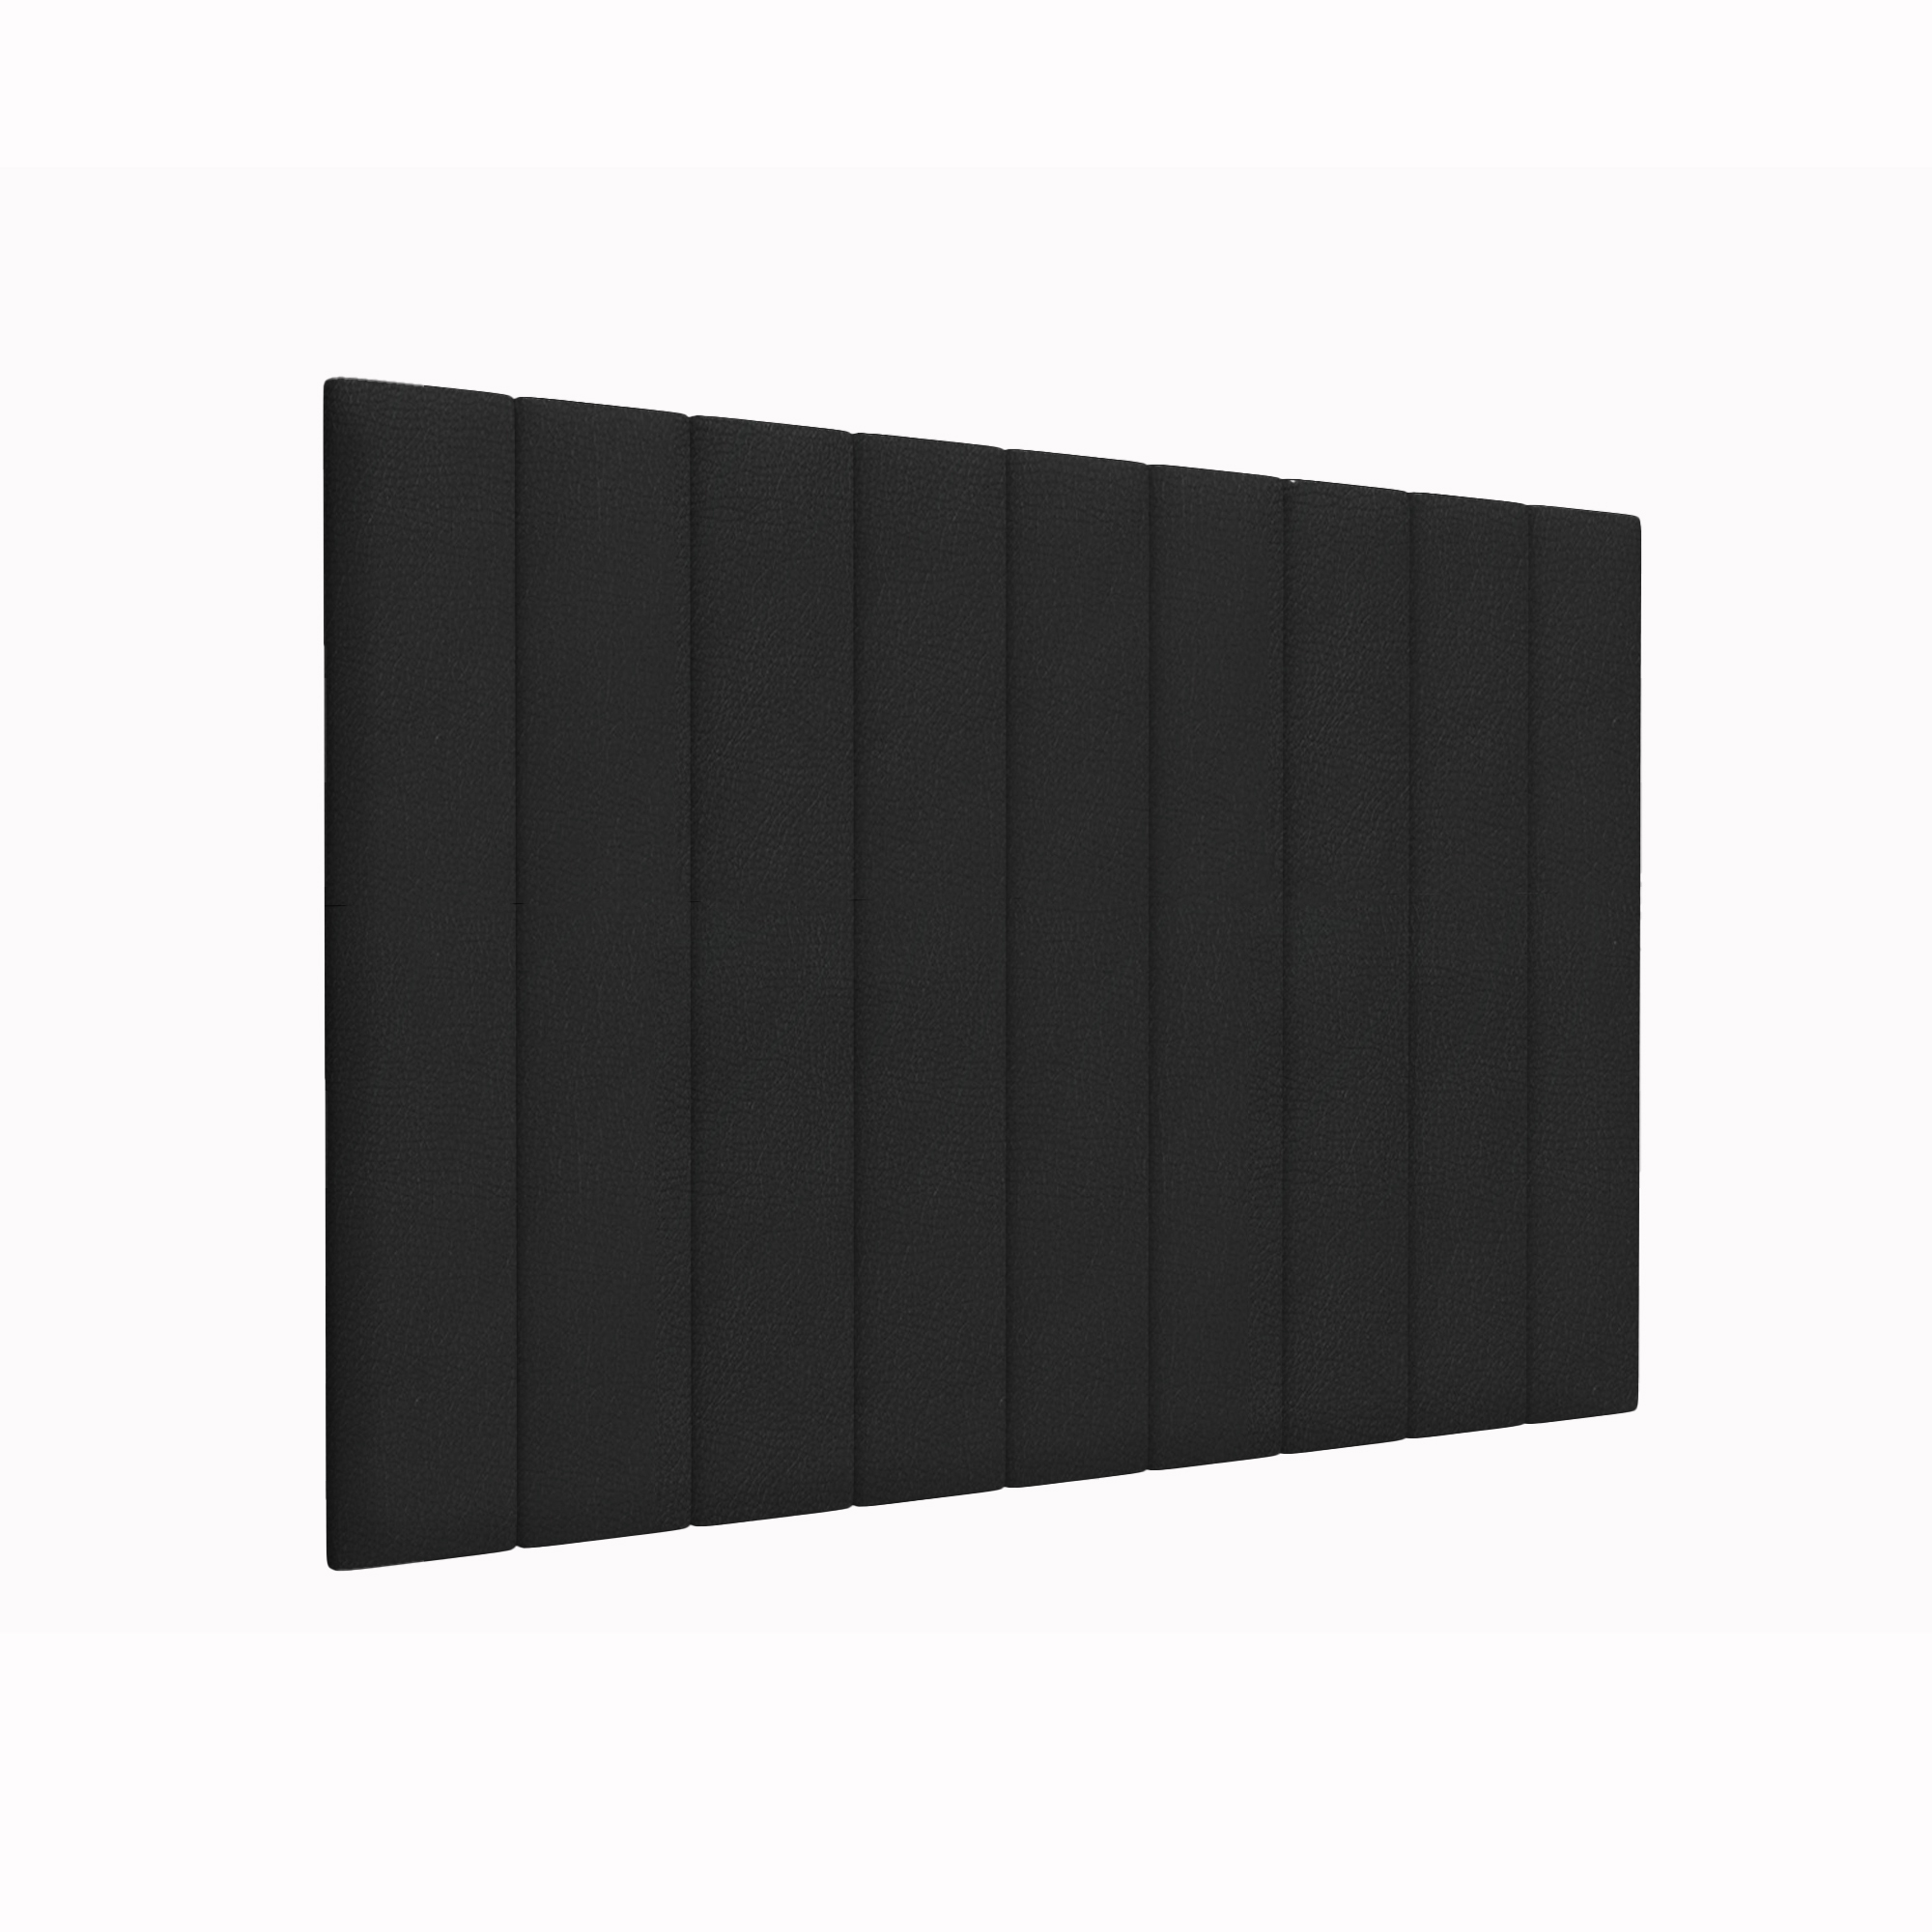 Мягкие стеновые панели Eco Leather Black 15х90 см 2 шт.